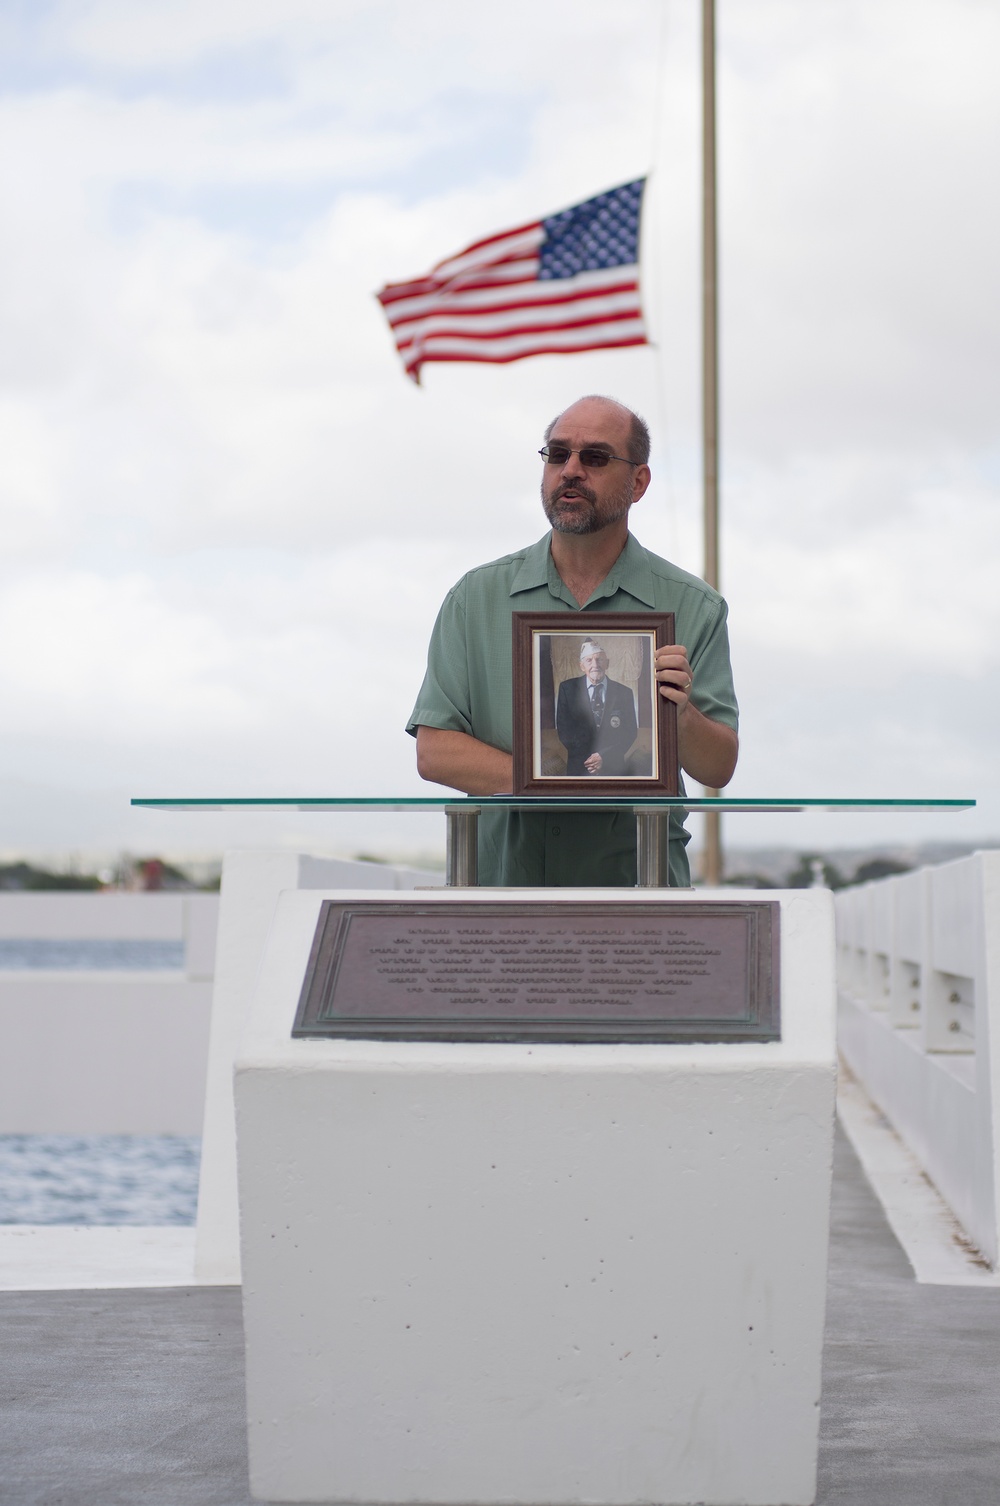 Pearl Harbor Survivor Receives Funeral Honors